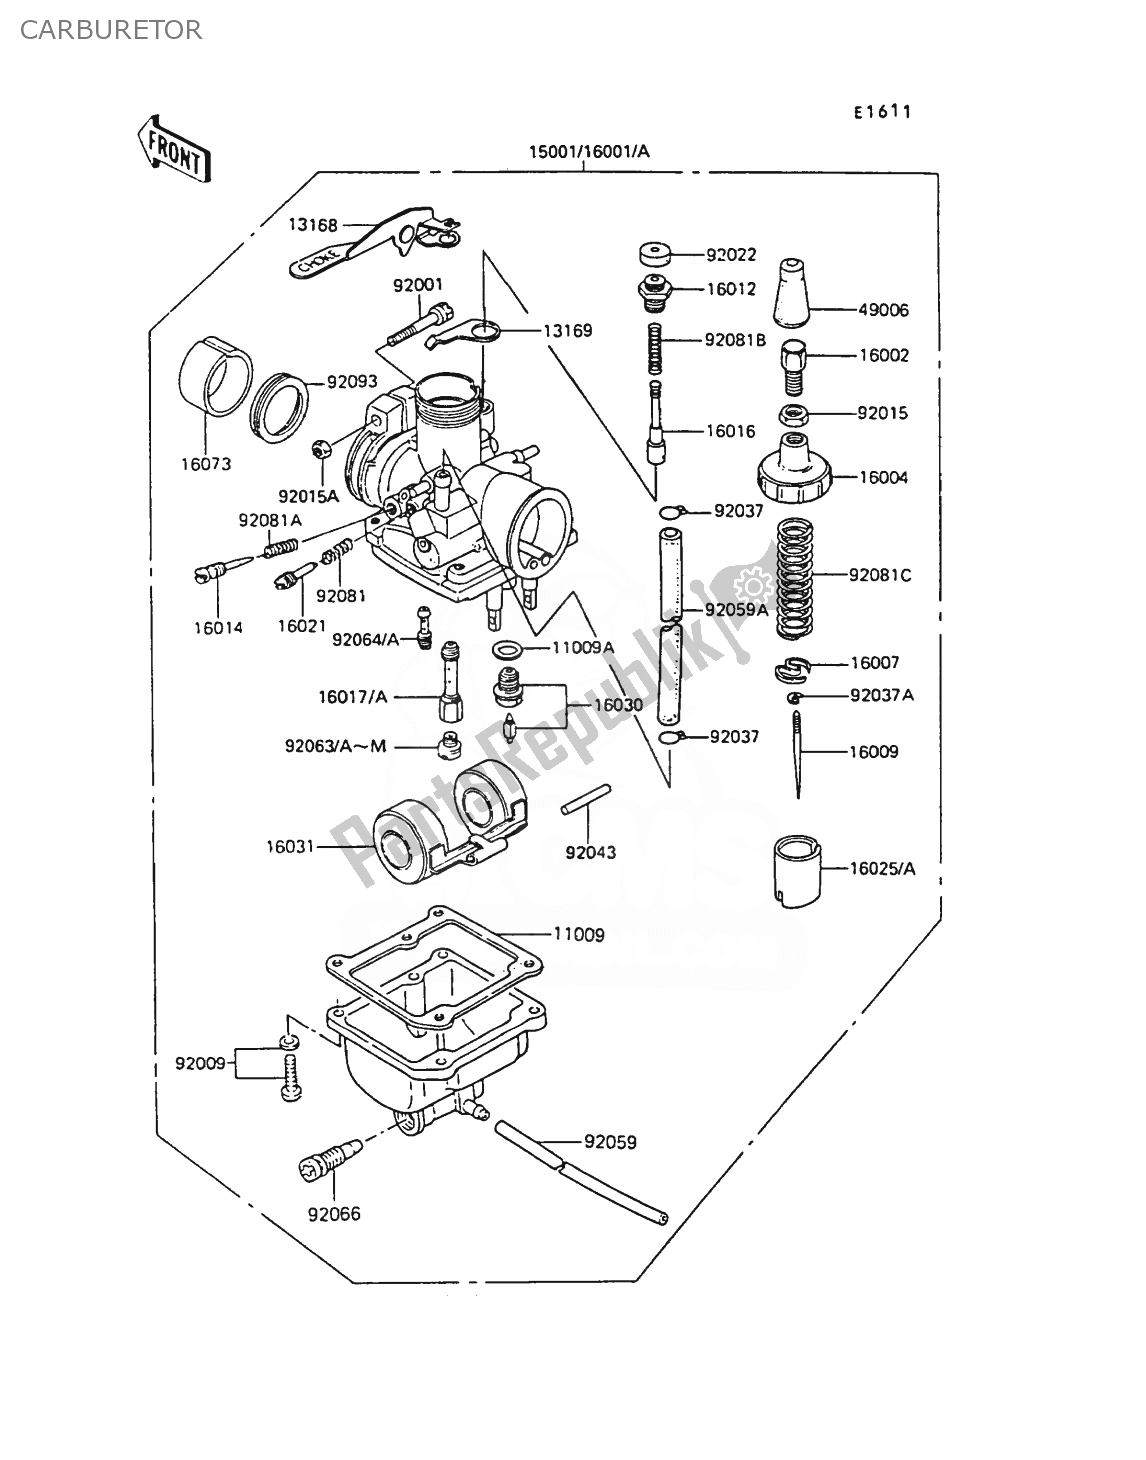 All parts for the Carburetor of the Kawasaki AR 50 1989